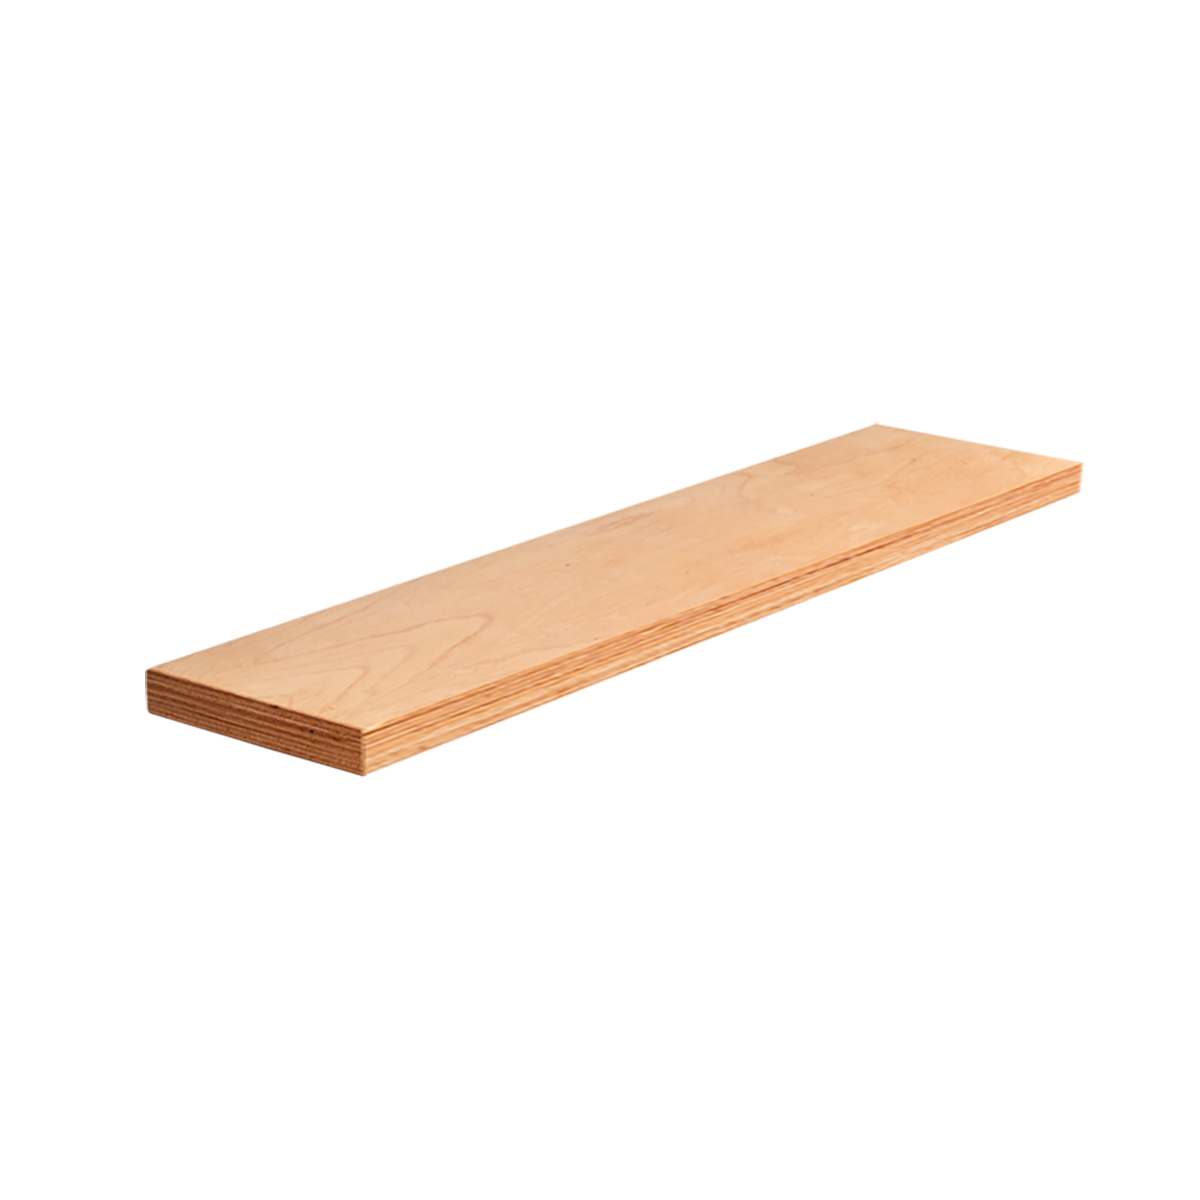 Beech plywood corner bench top extension of 23cm deep